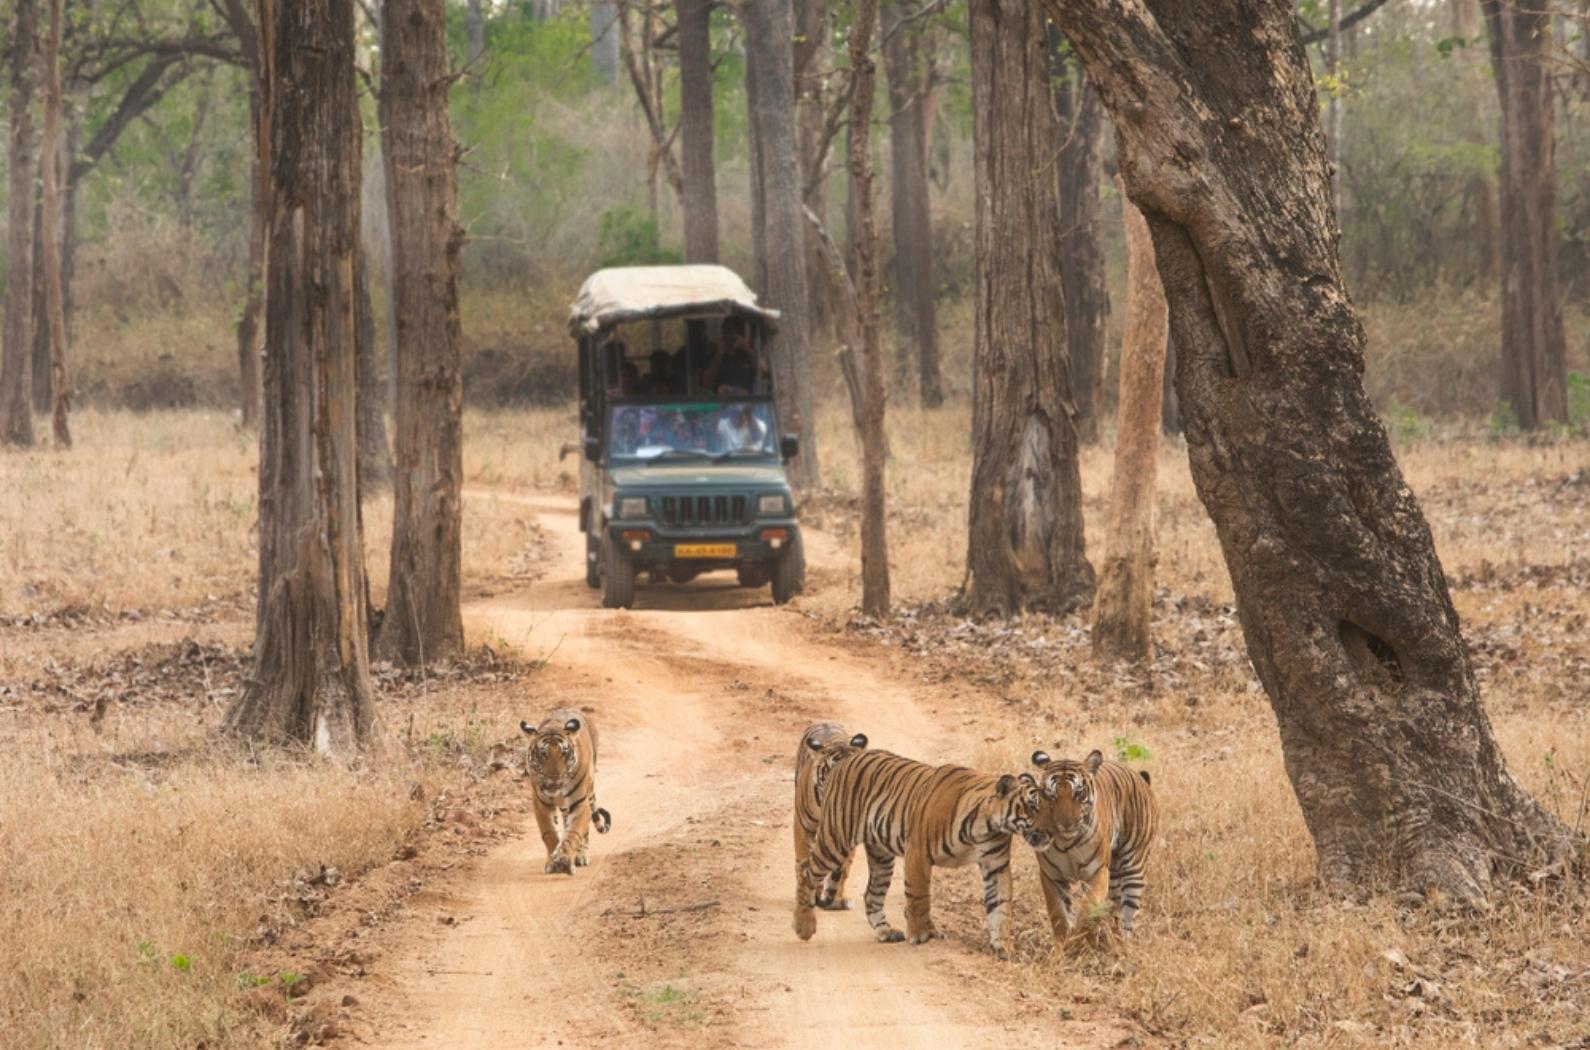 Tourists on safari watching tigers.